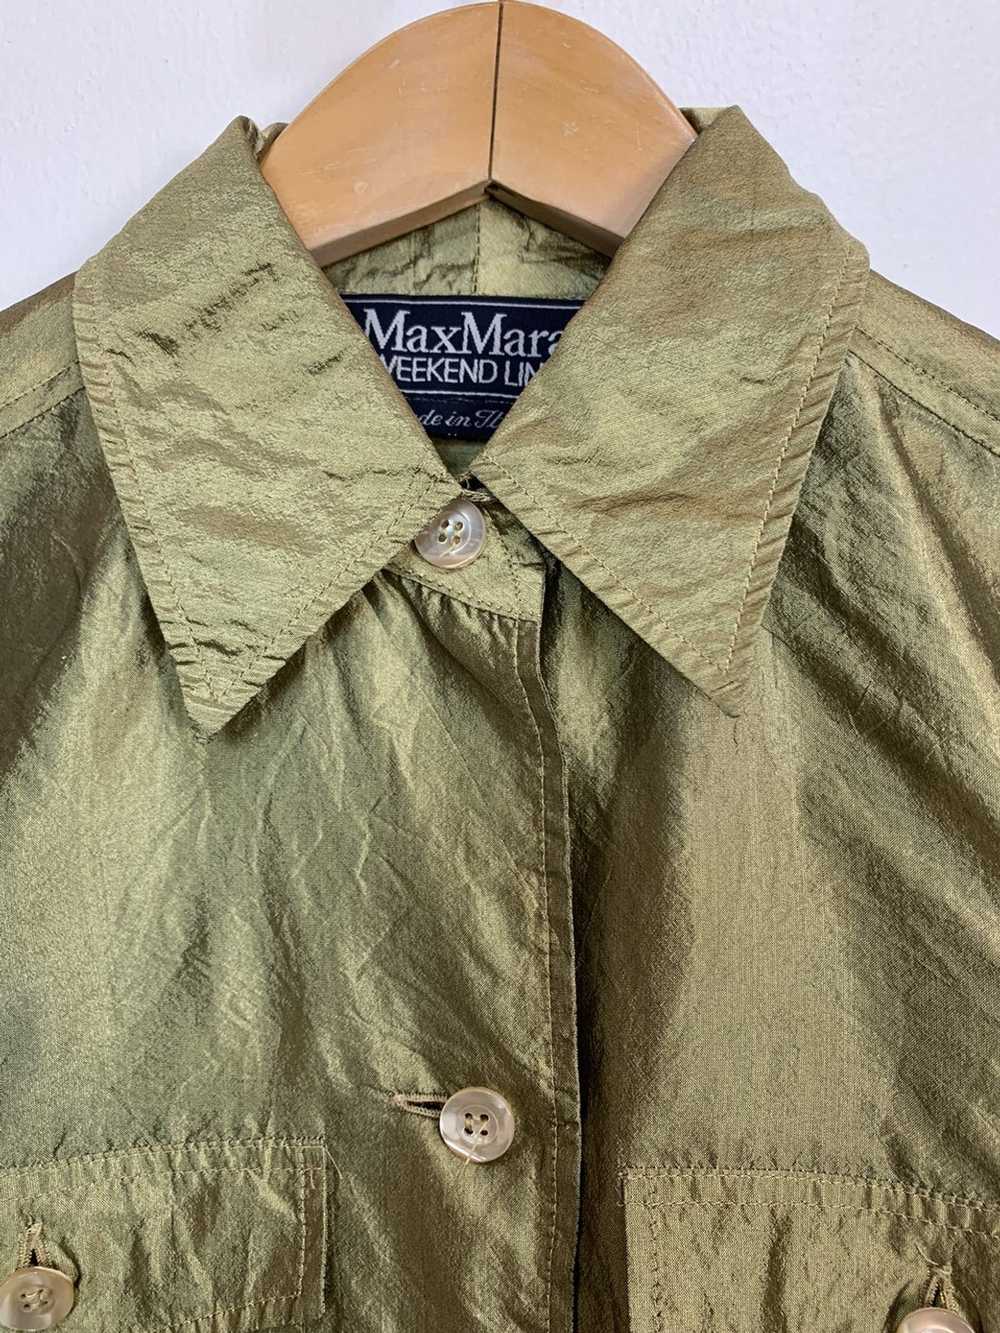 Max Mara Maxmara Weekend Line Silk Shirt - image 7